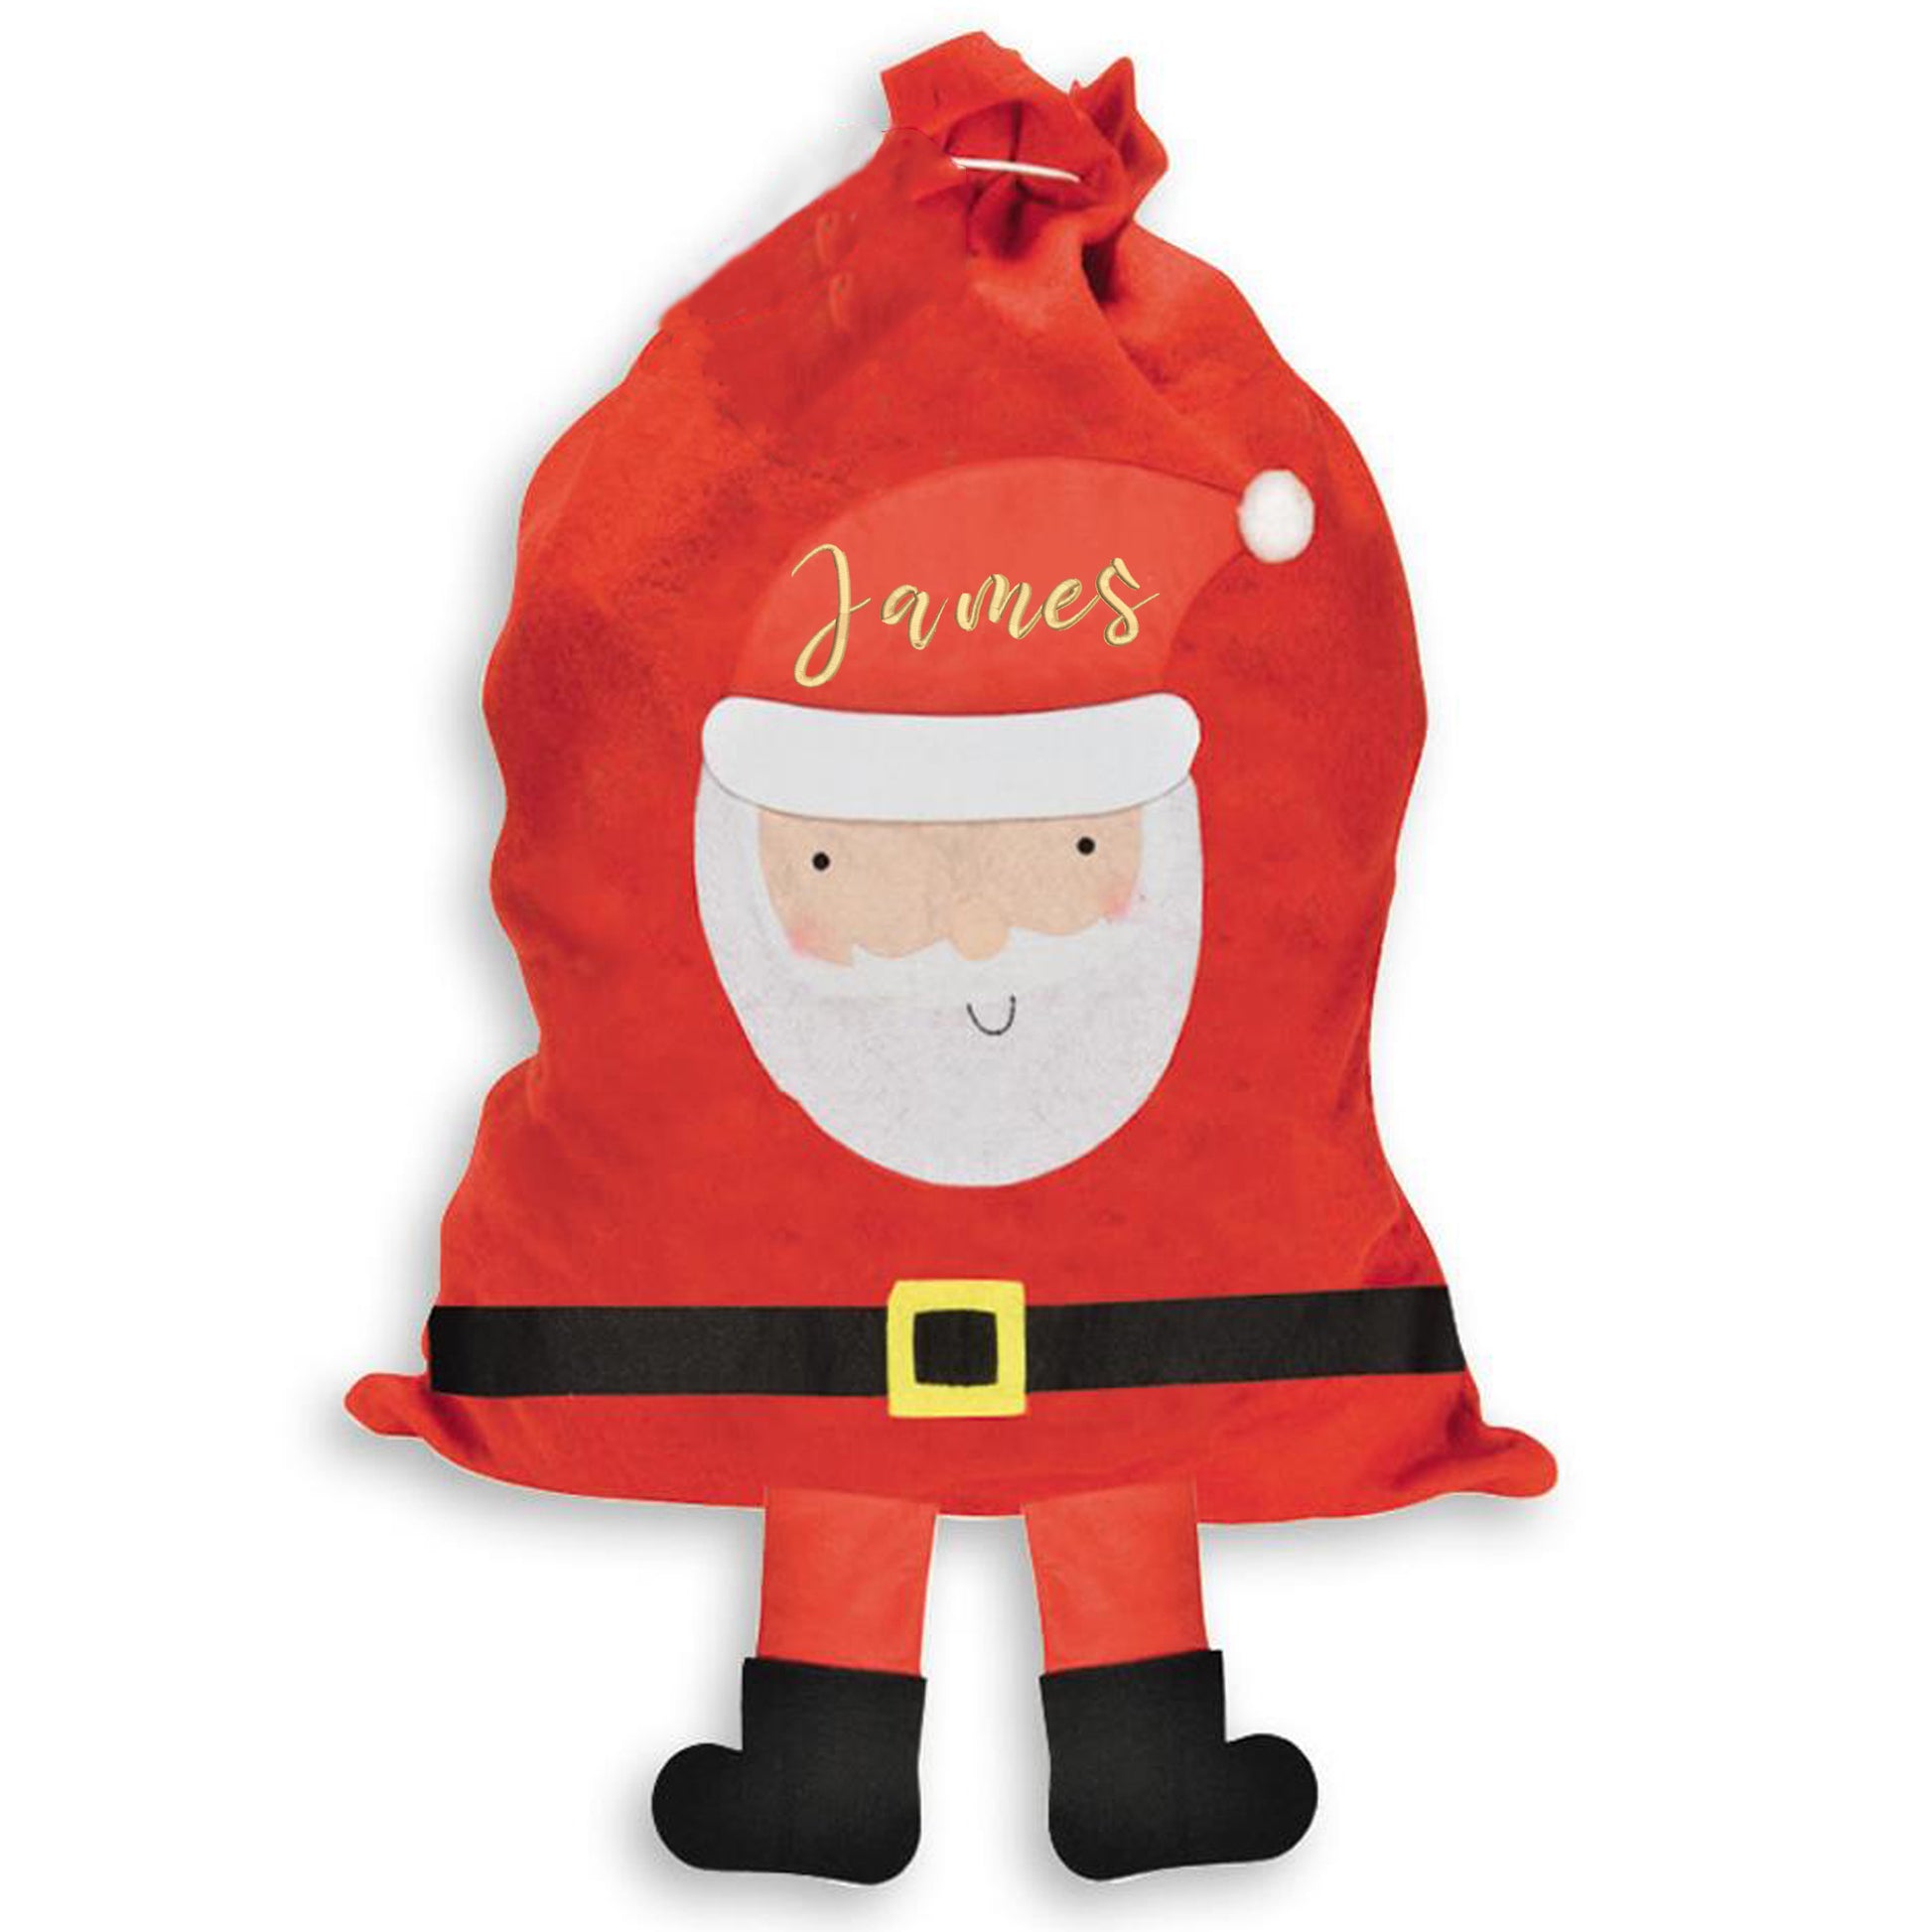 Personalised Embroidered Christmas Jumbo Stocking Sack With Legs Santa Or Elf Design  - Always Looking Good -   